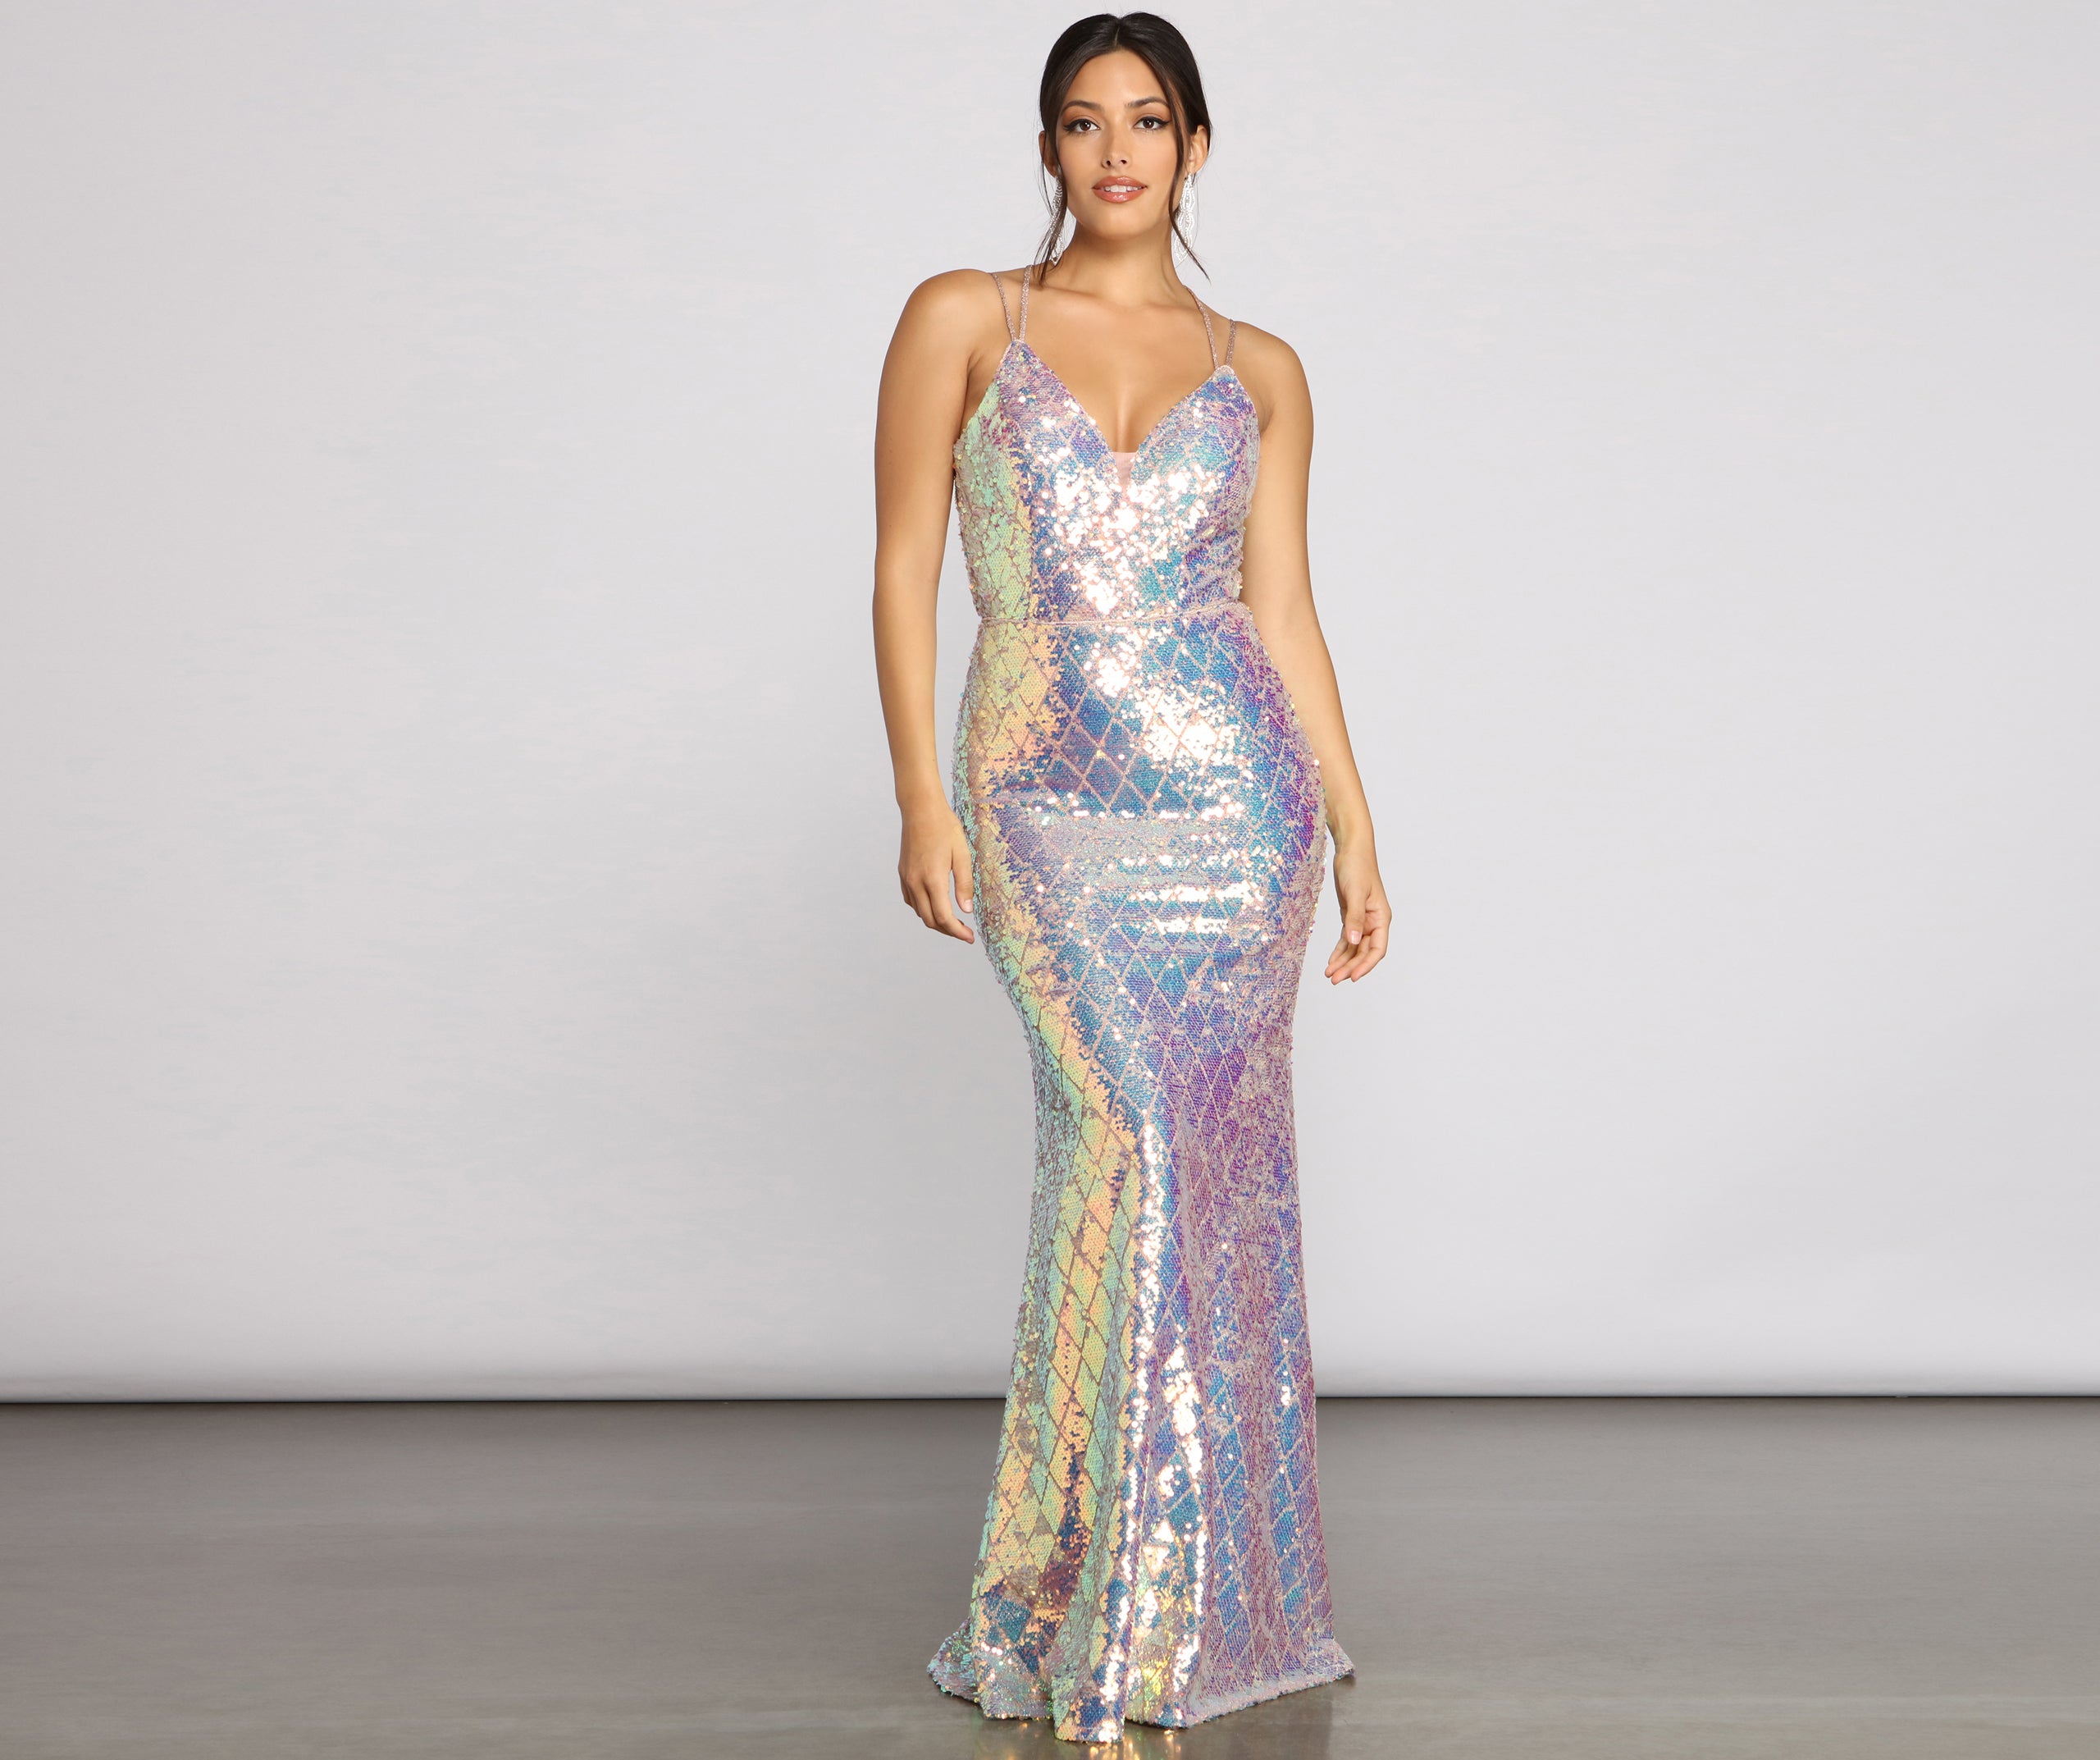 Ariel Formal Iridescent Sequin Dress